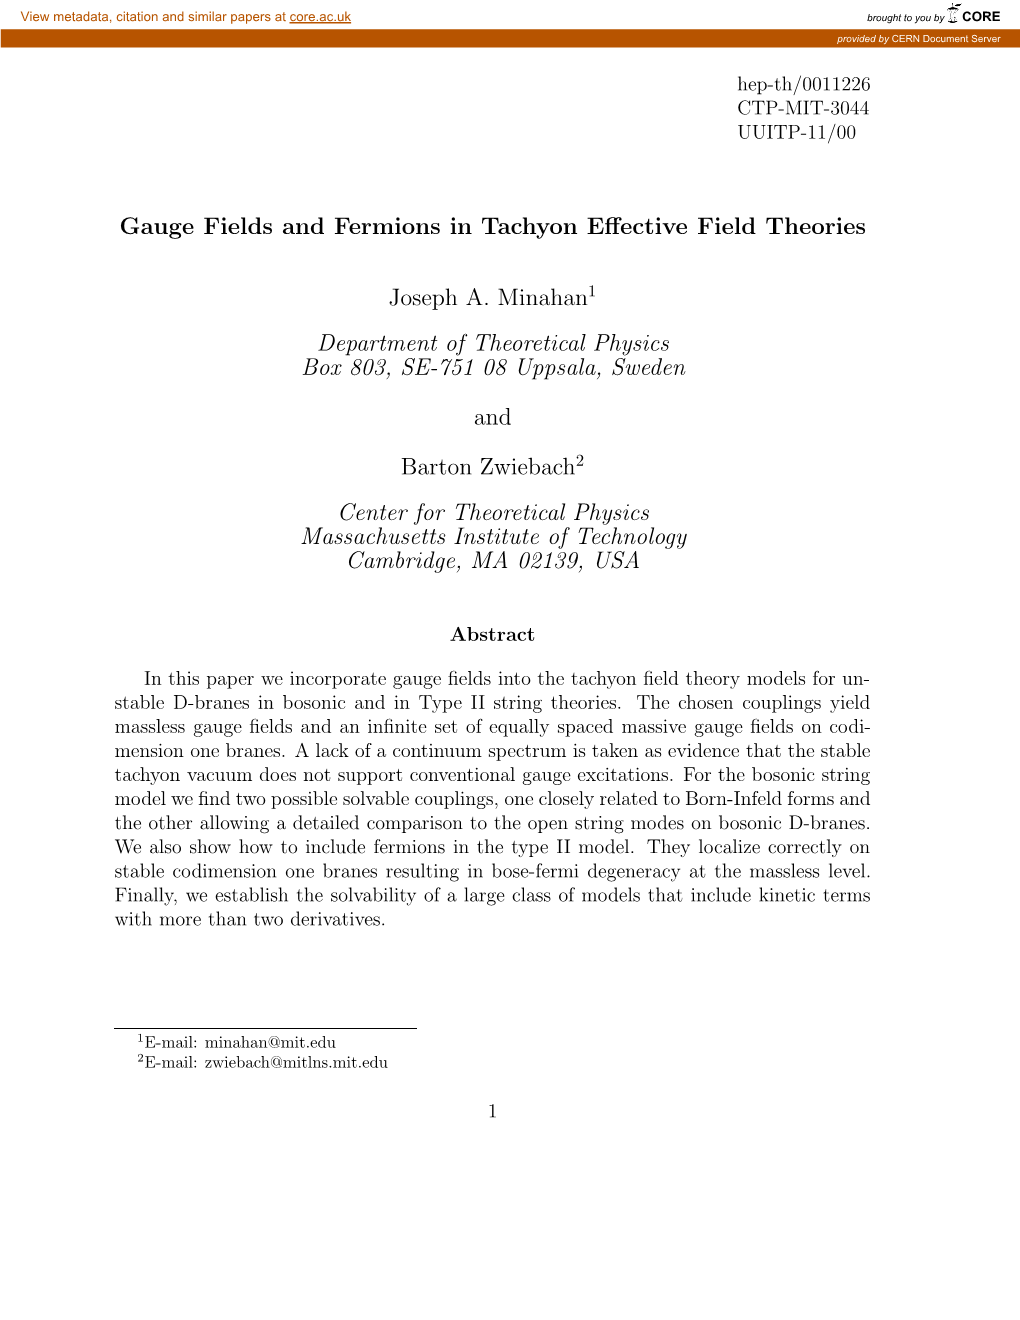 Gauge Fields and Fermions in Tachyon Effective Field Theories